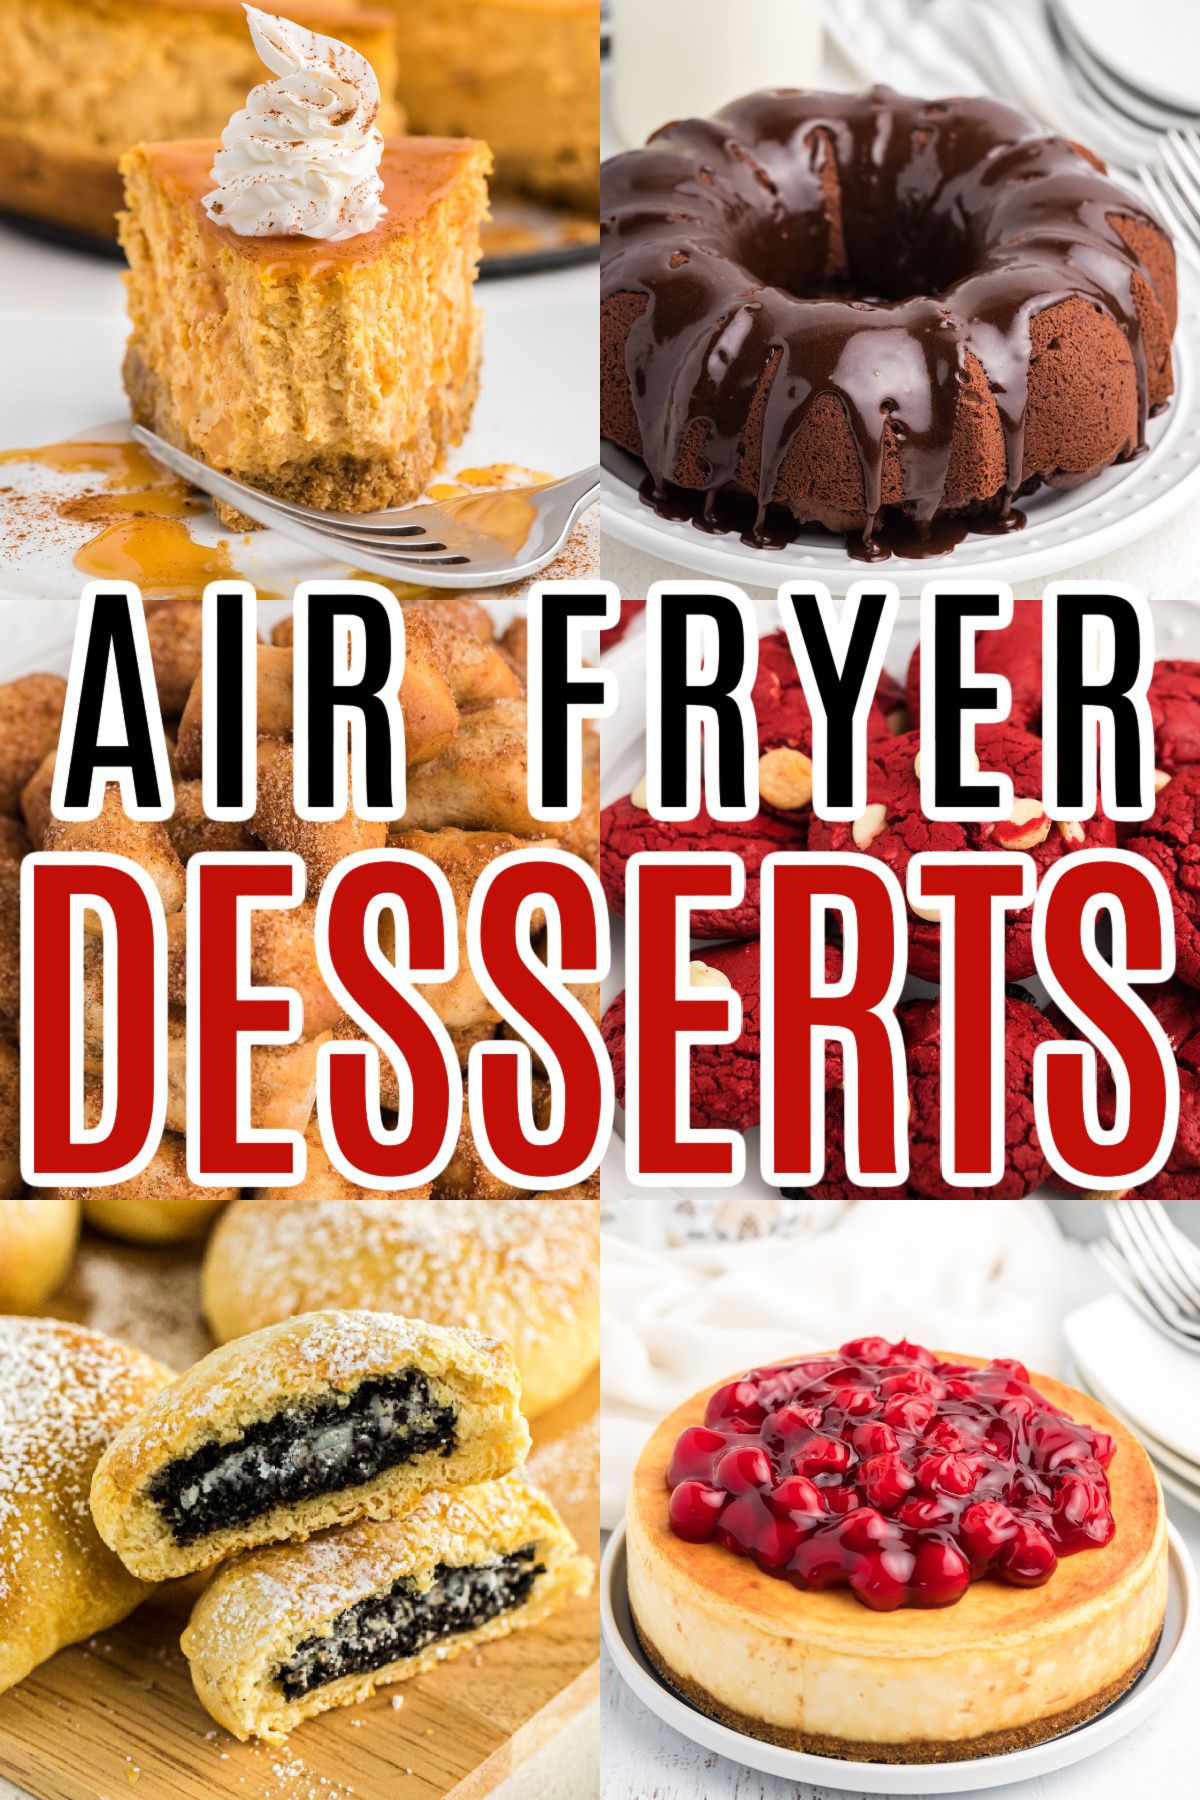 10 Scrumptious Air Fryer Desserts Recipes (Unique & Simple)